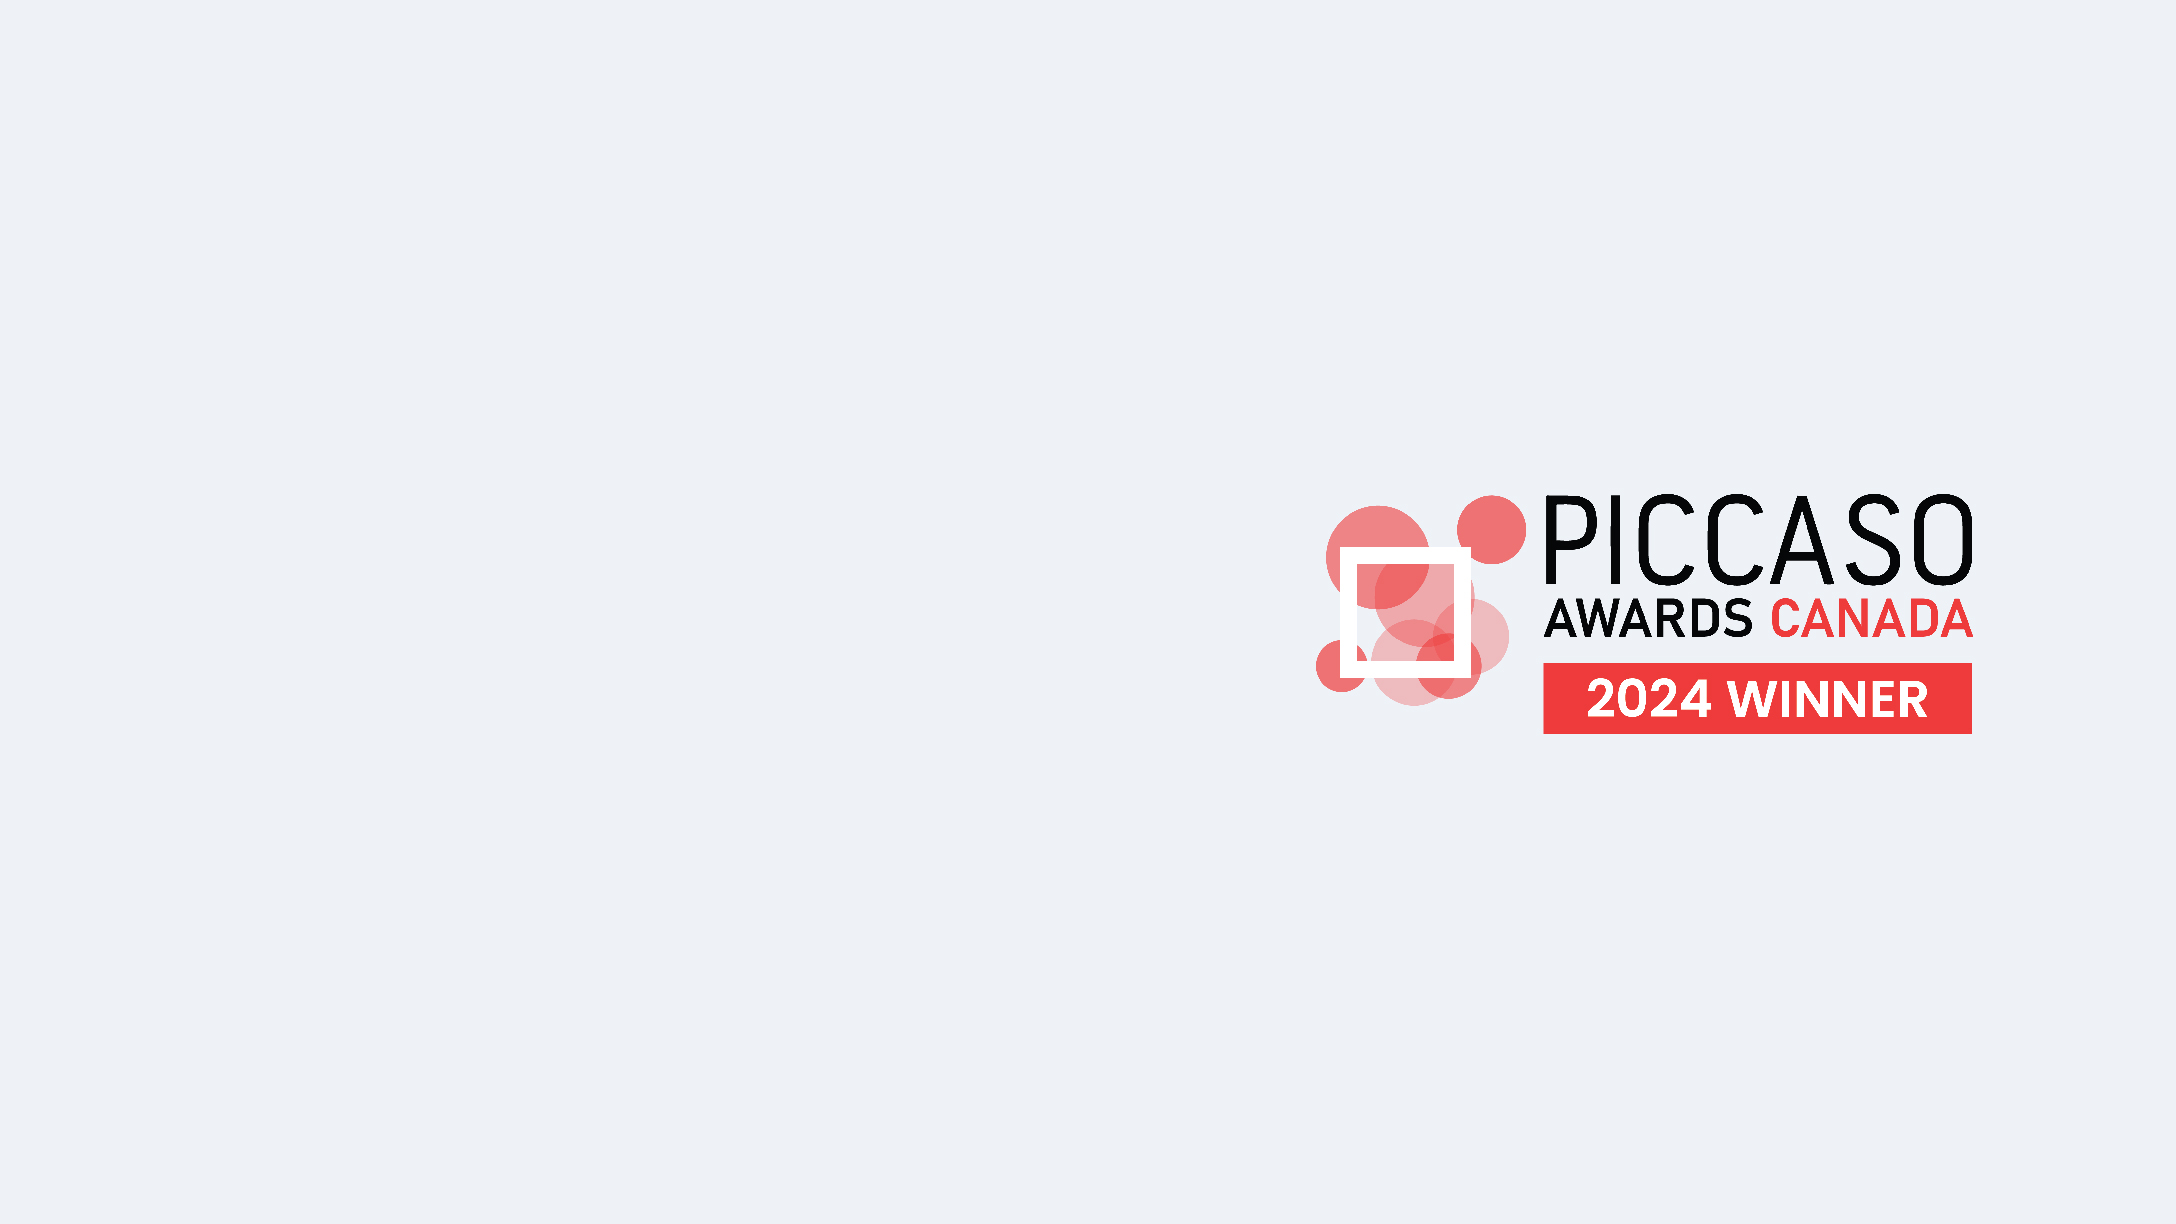 Image of PICCASO Awards Canada logo